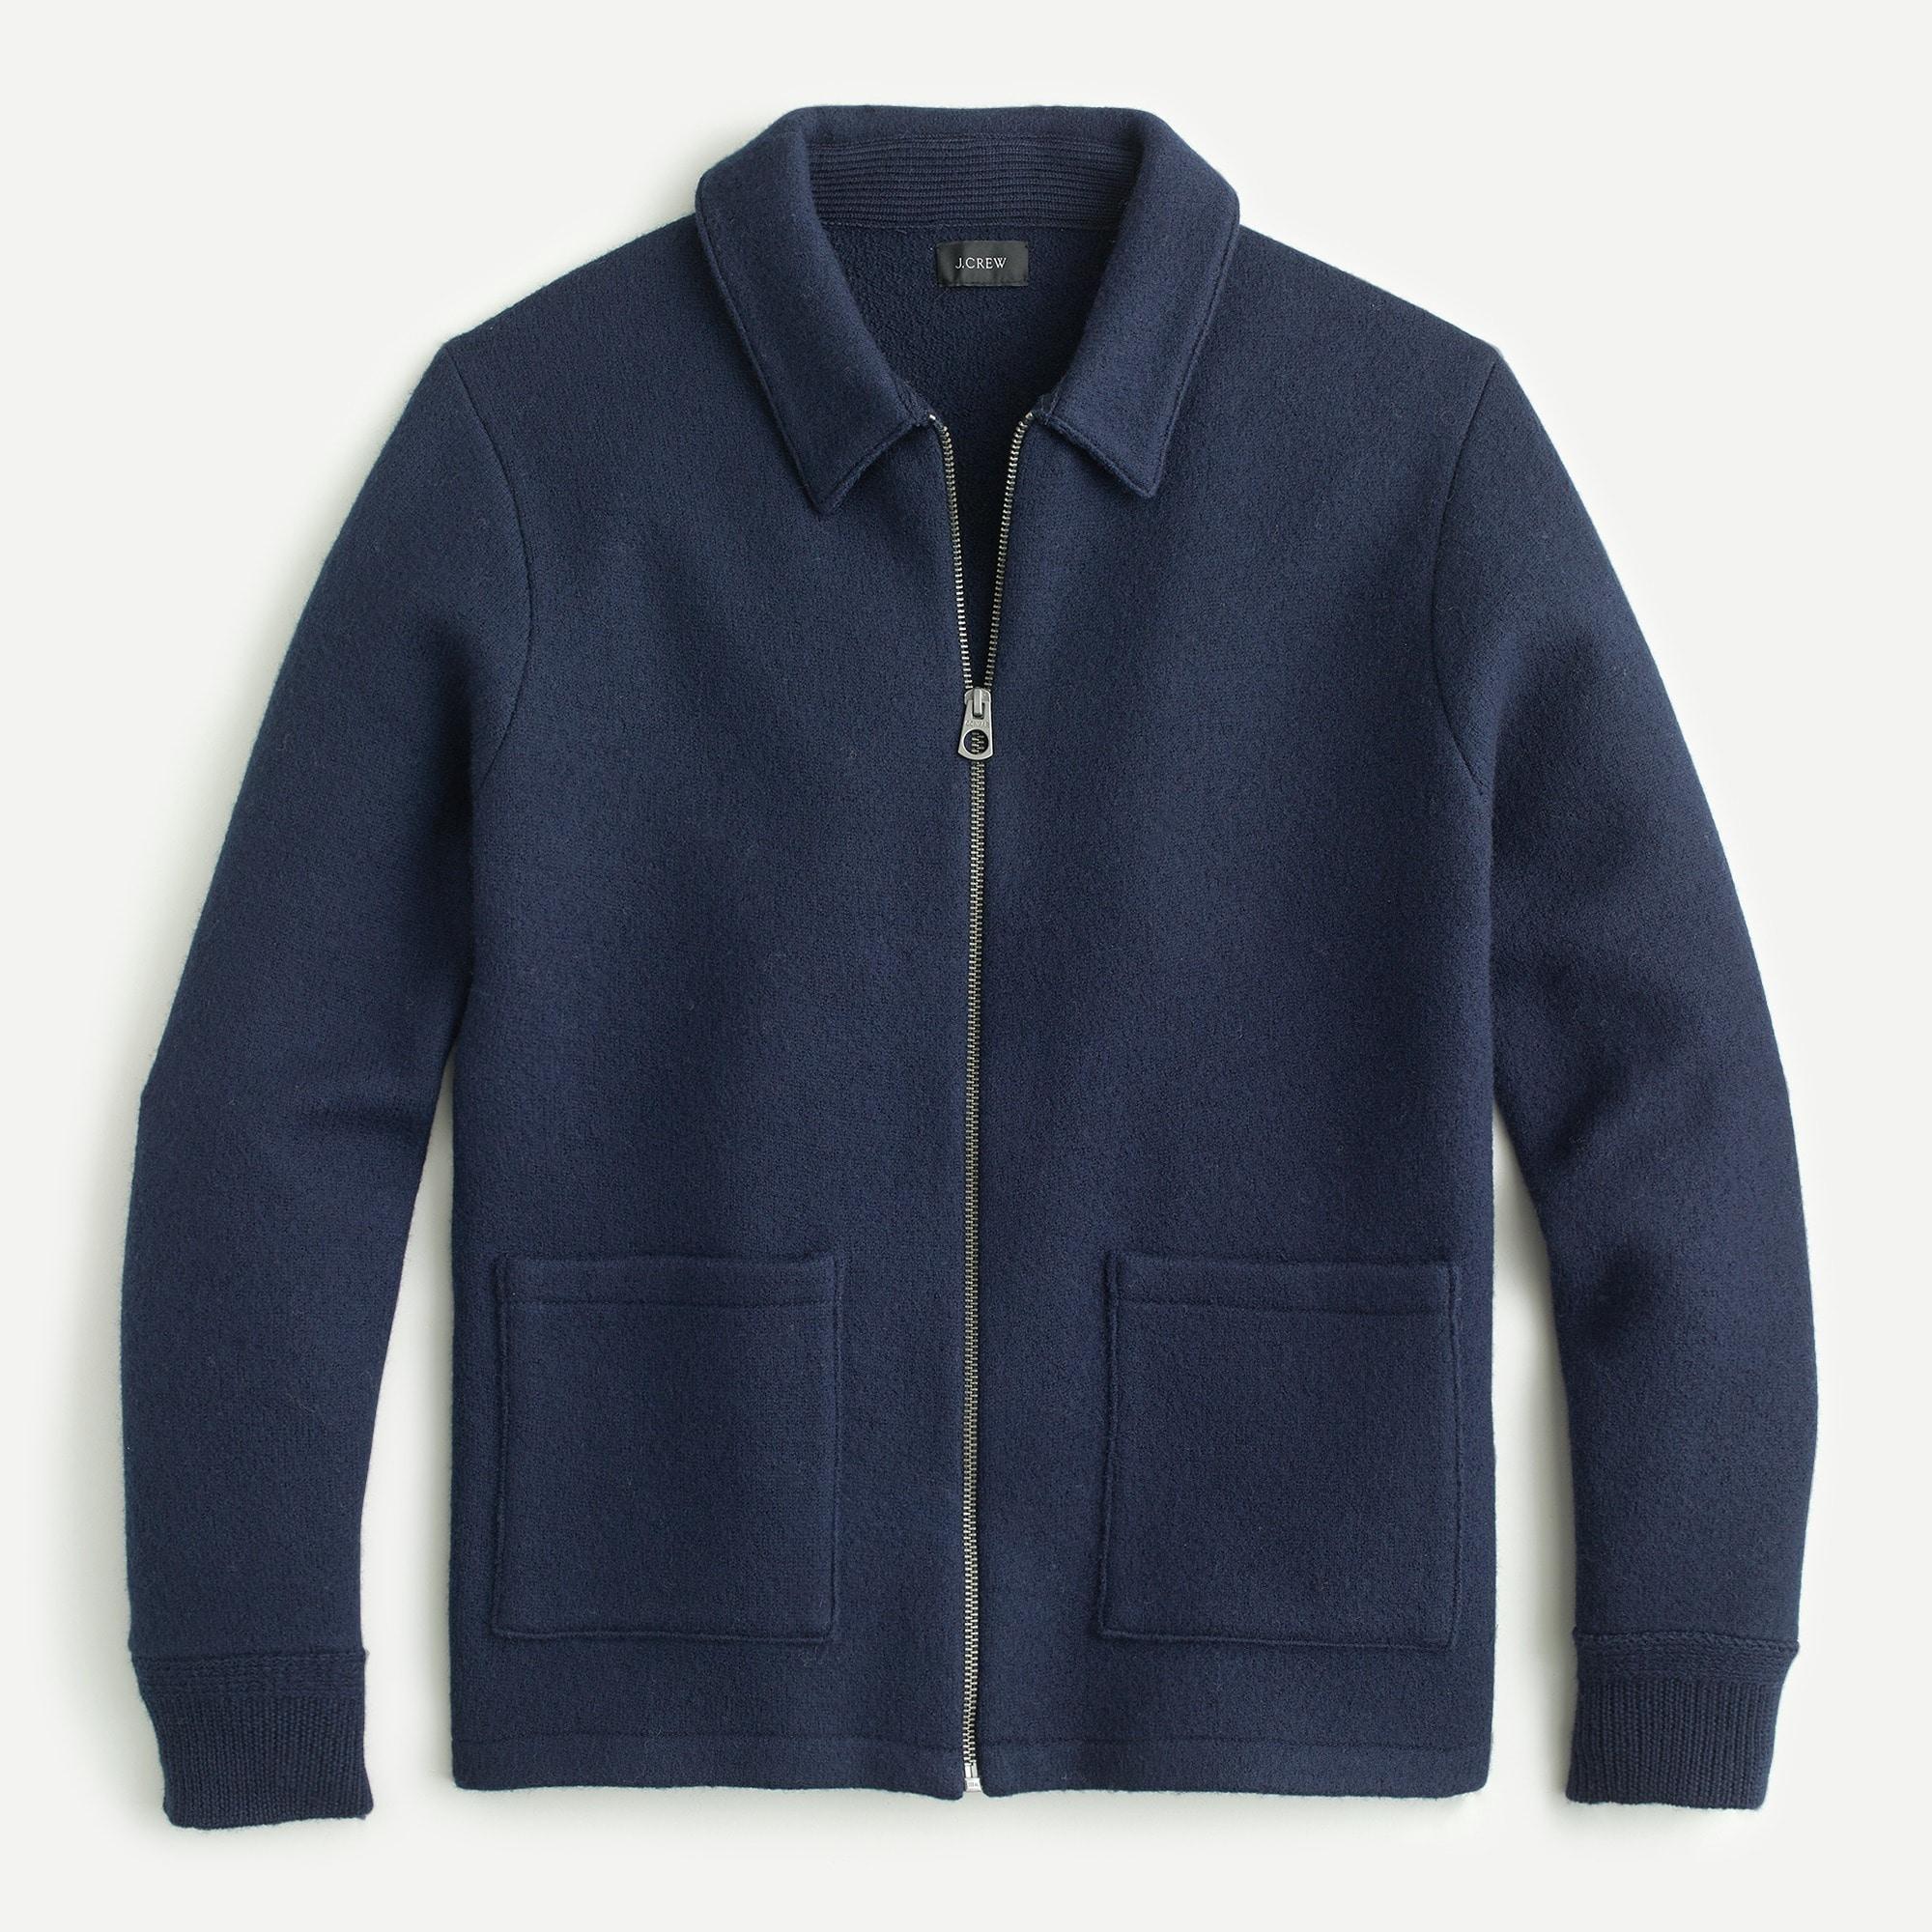 J.Crew Boiled Merino Wool Coach's Jacket in Navy (Blue) for Men - Lyst